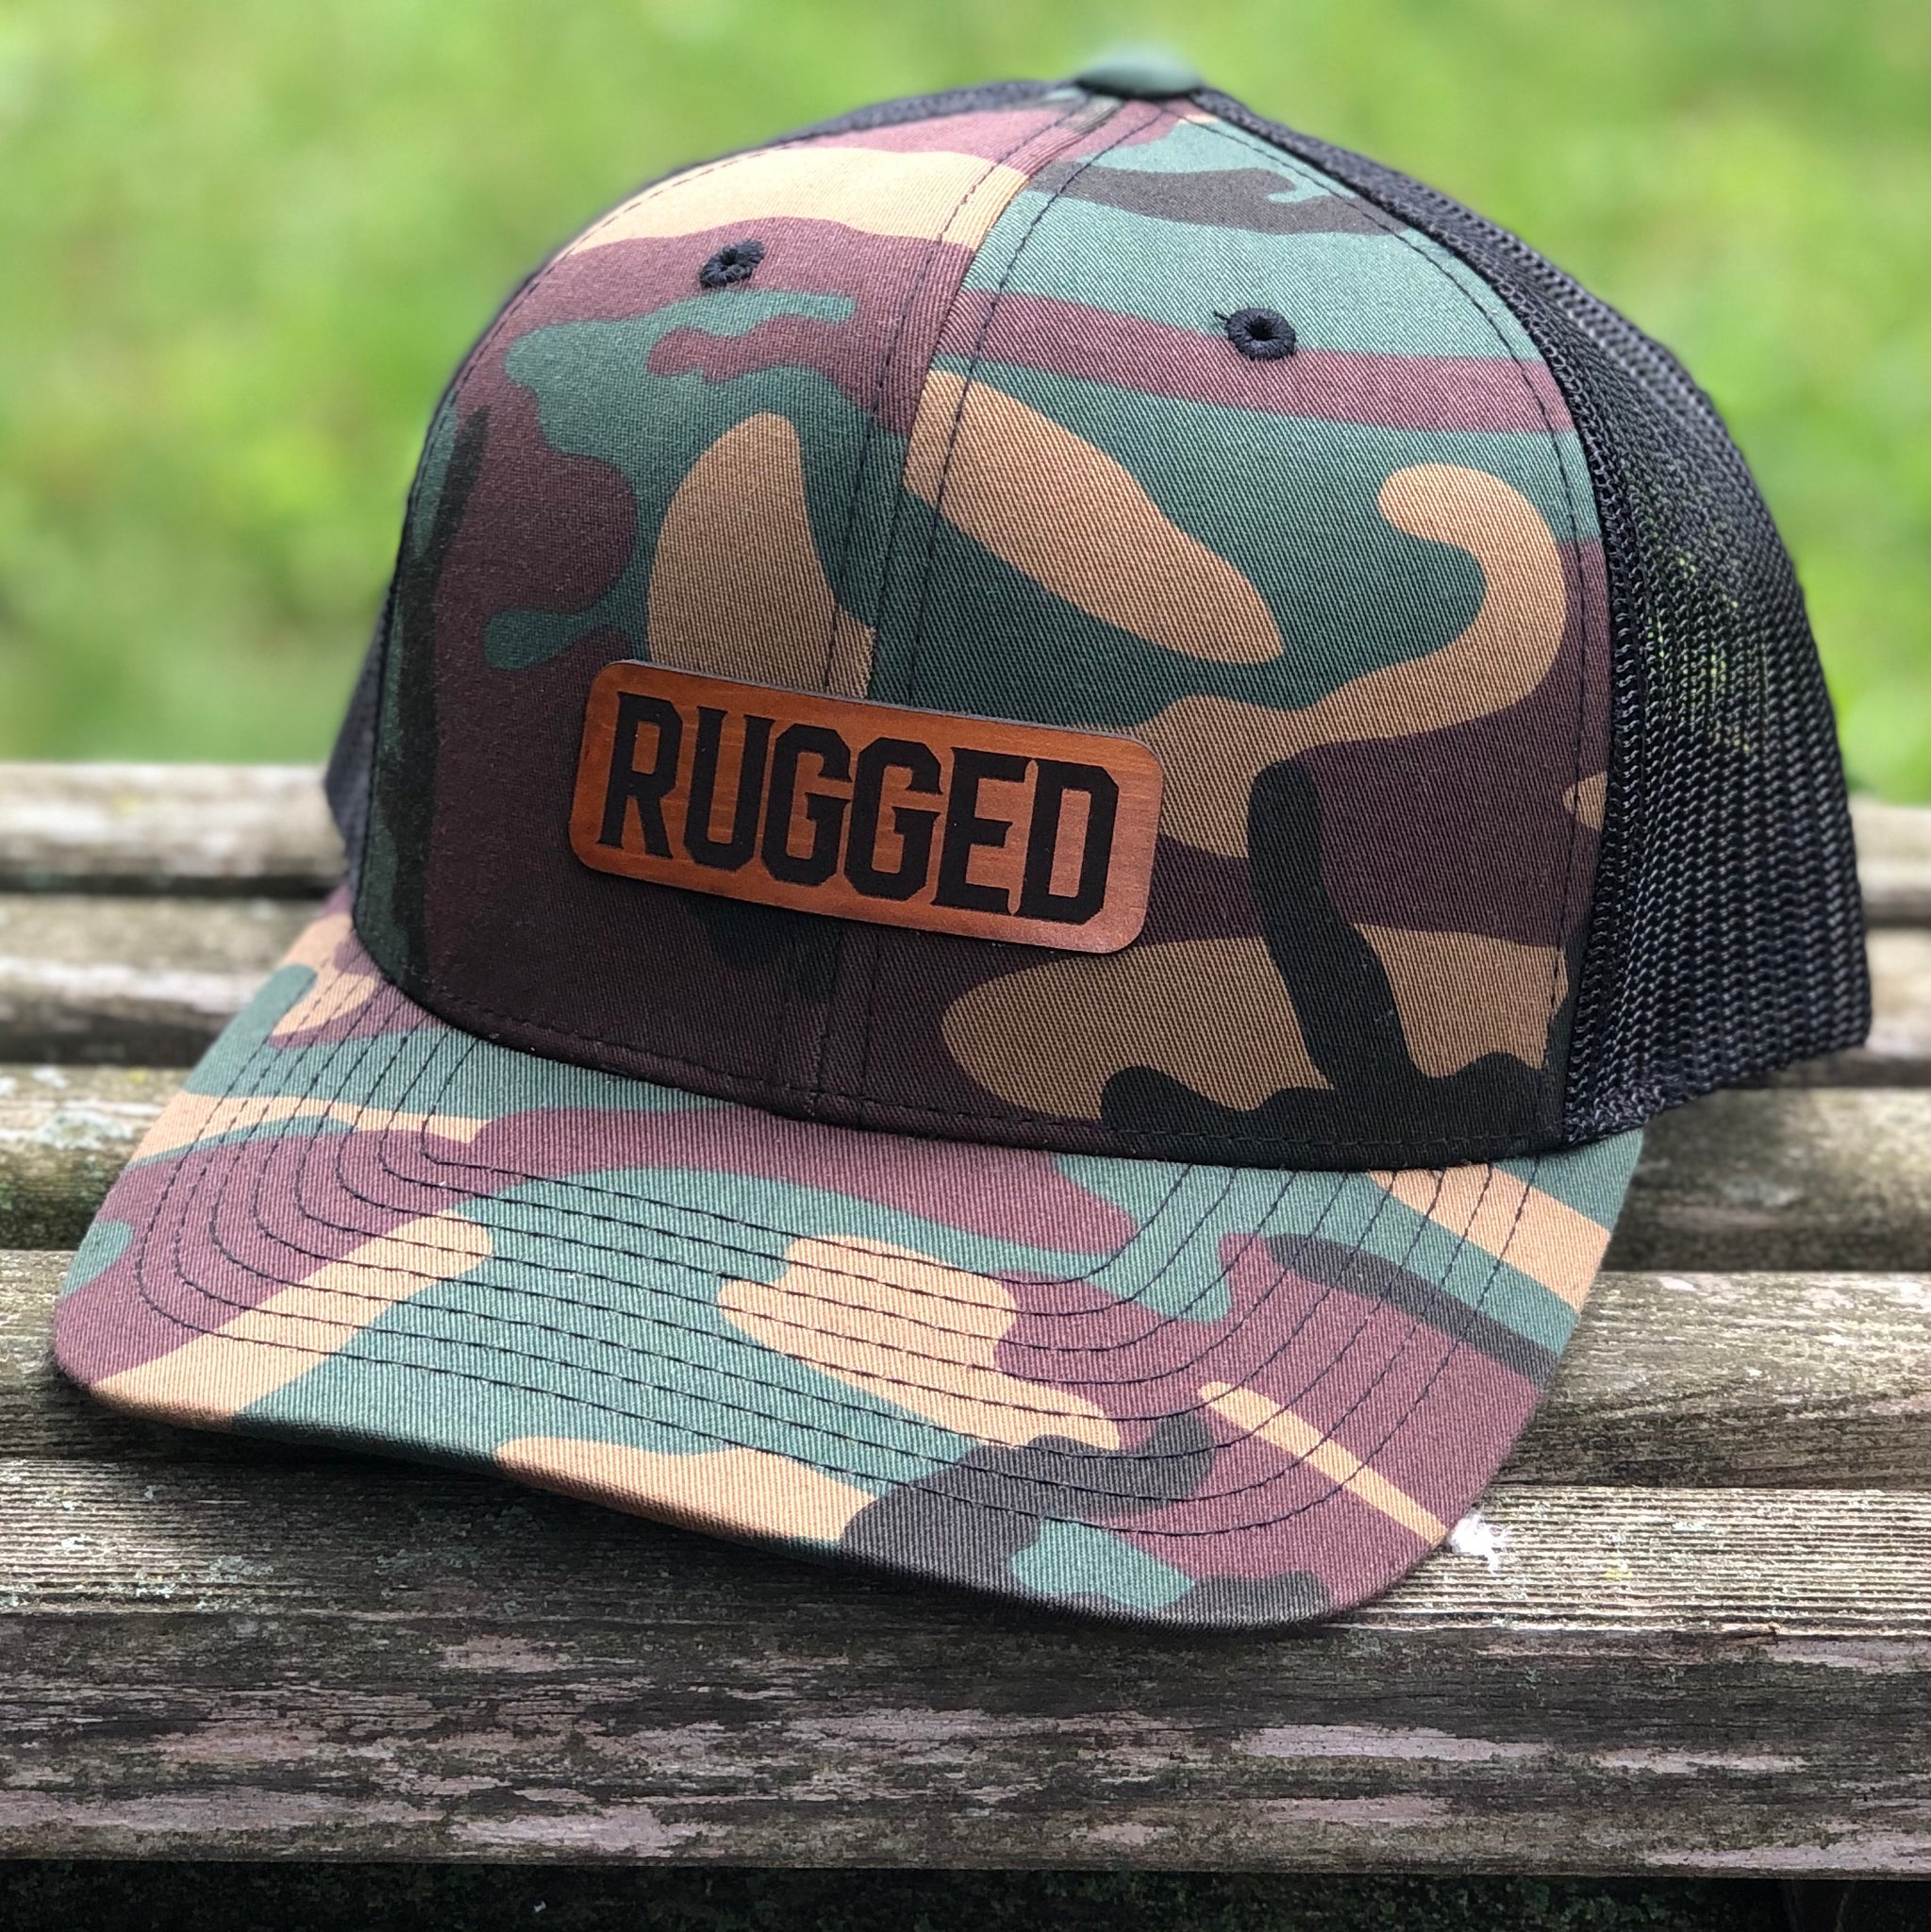 RUGGED - Woodland Camo – The Rugged Brand